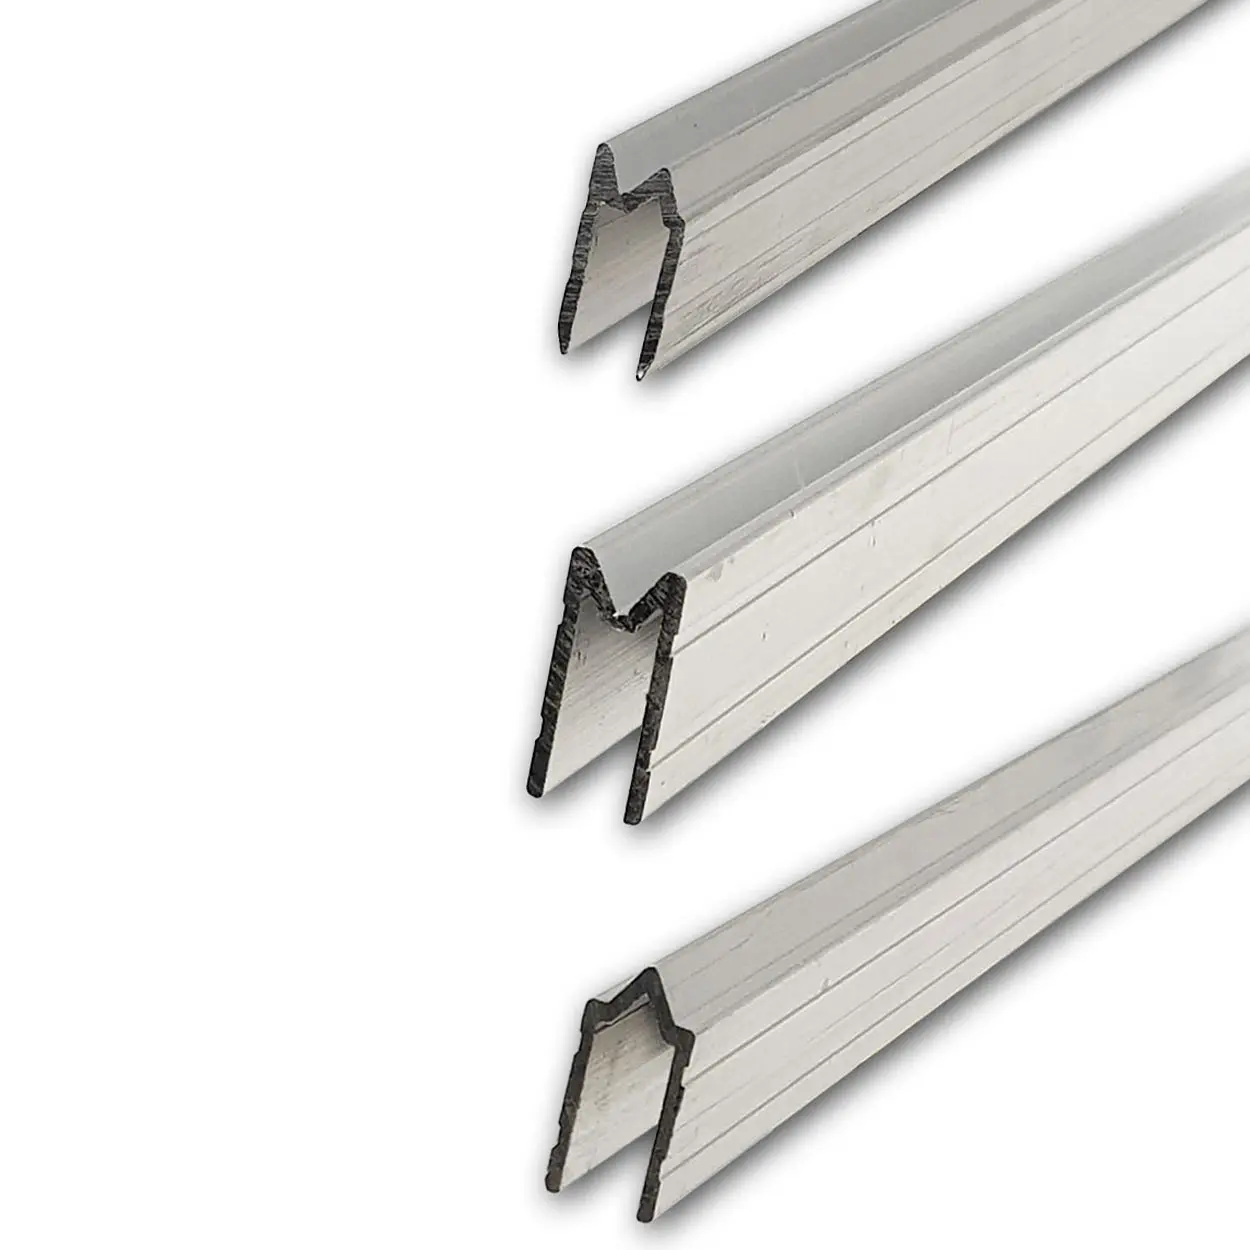 Profilé aluminium d'emboitement de capot sur mesure